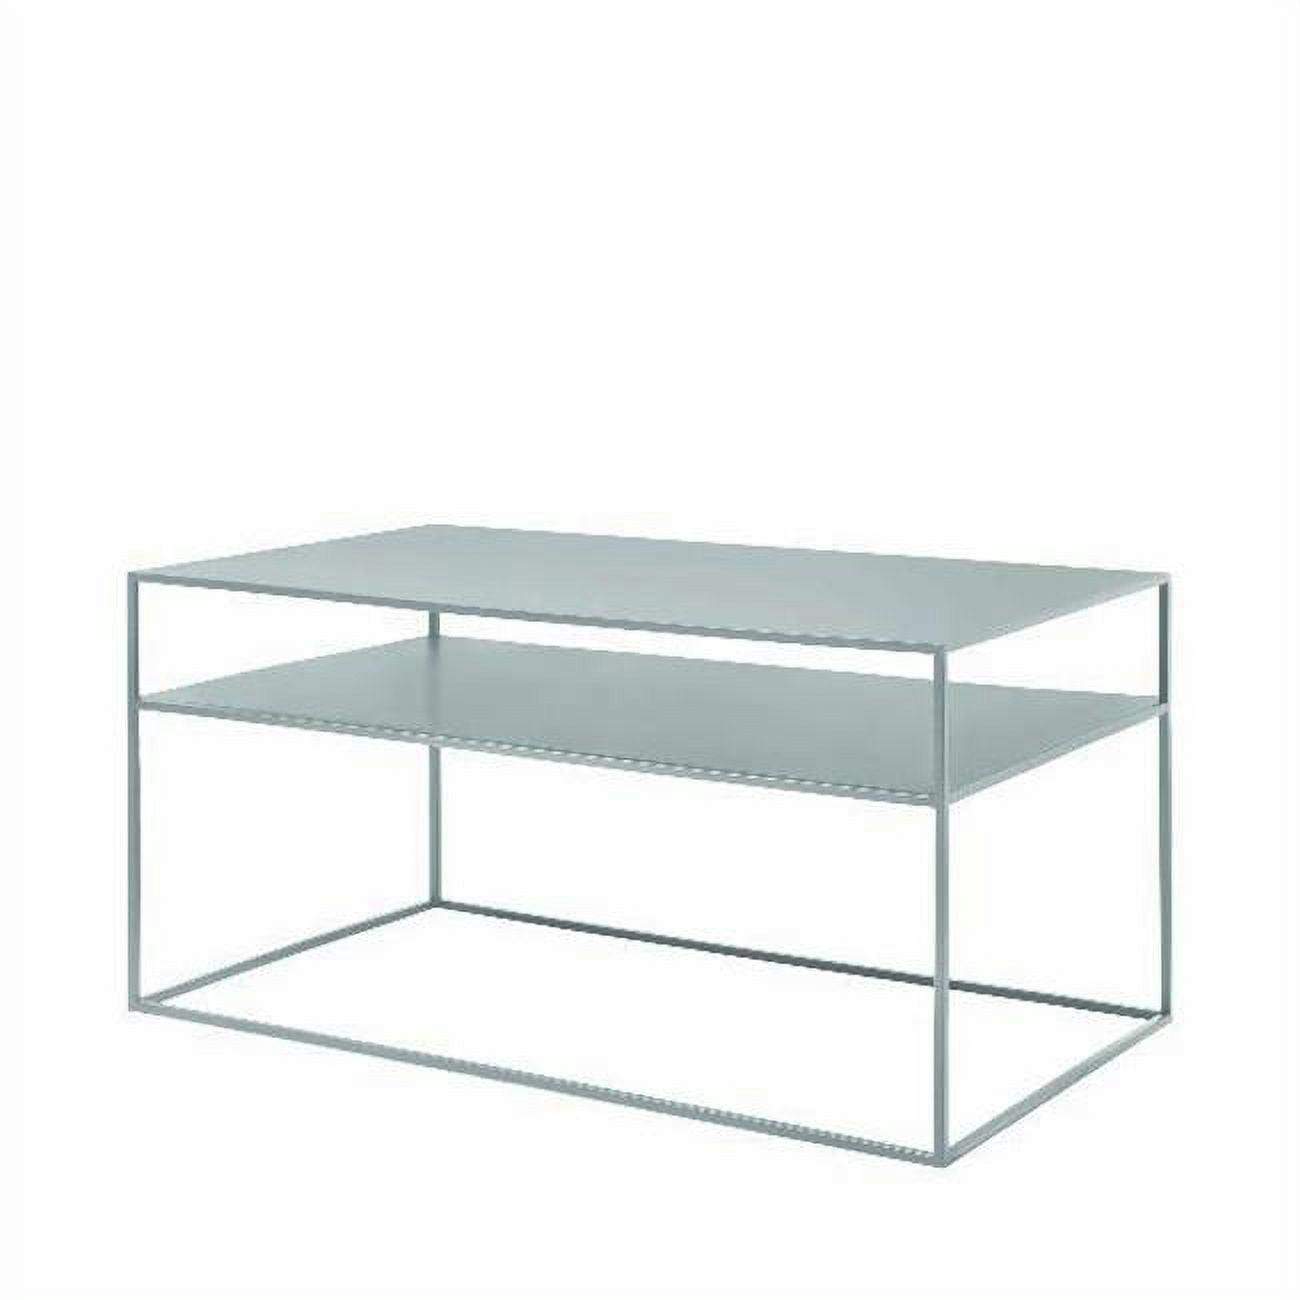 Elegant Industrial Rectangular Black Steel Coffee Table with Shelf